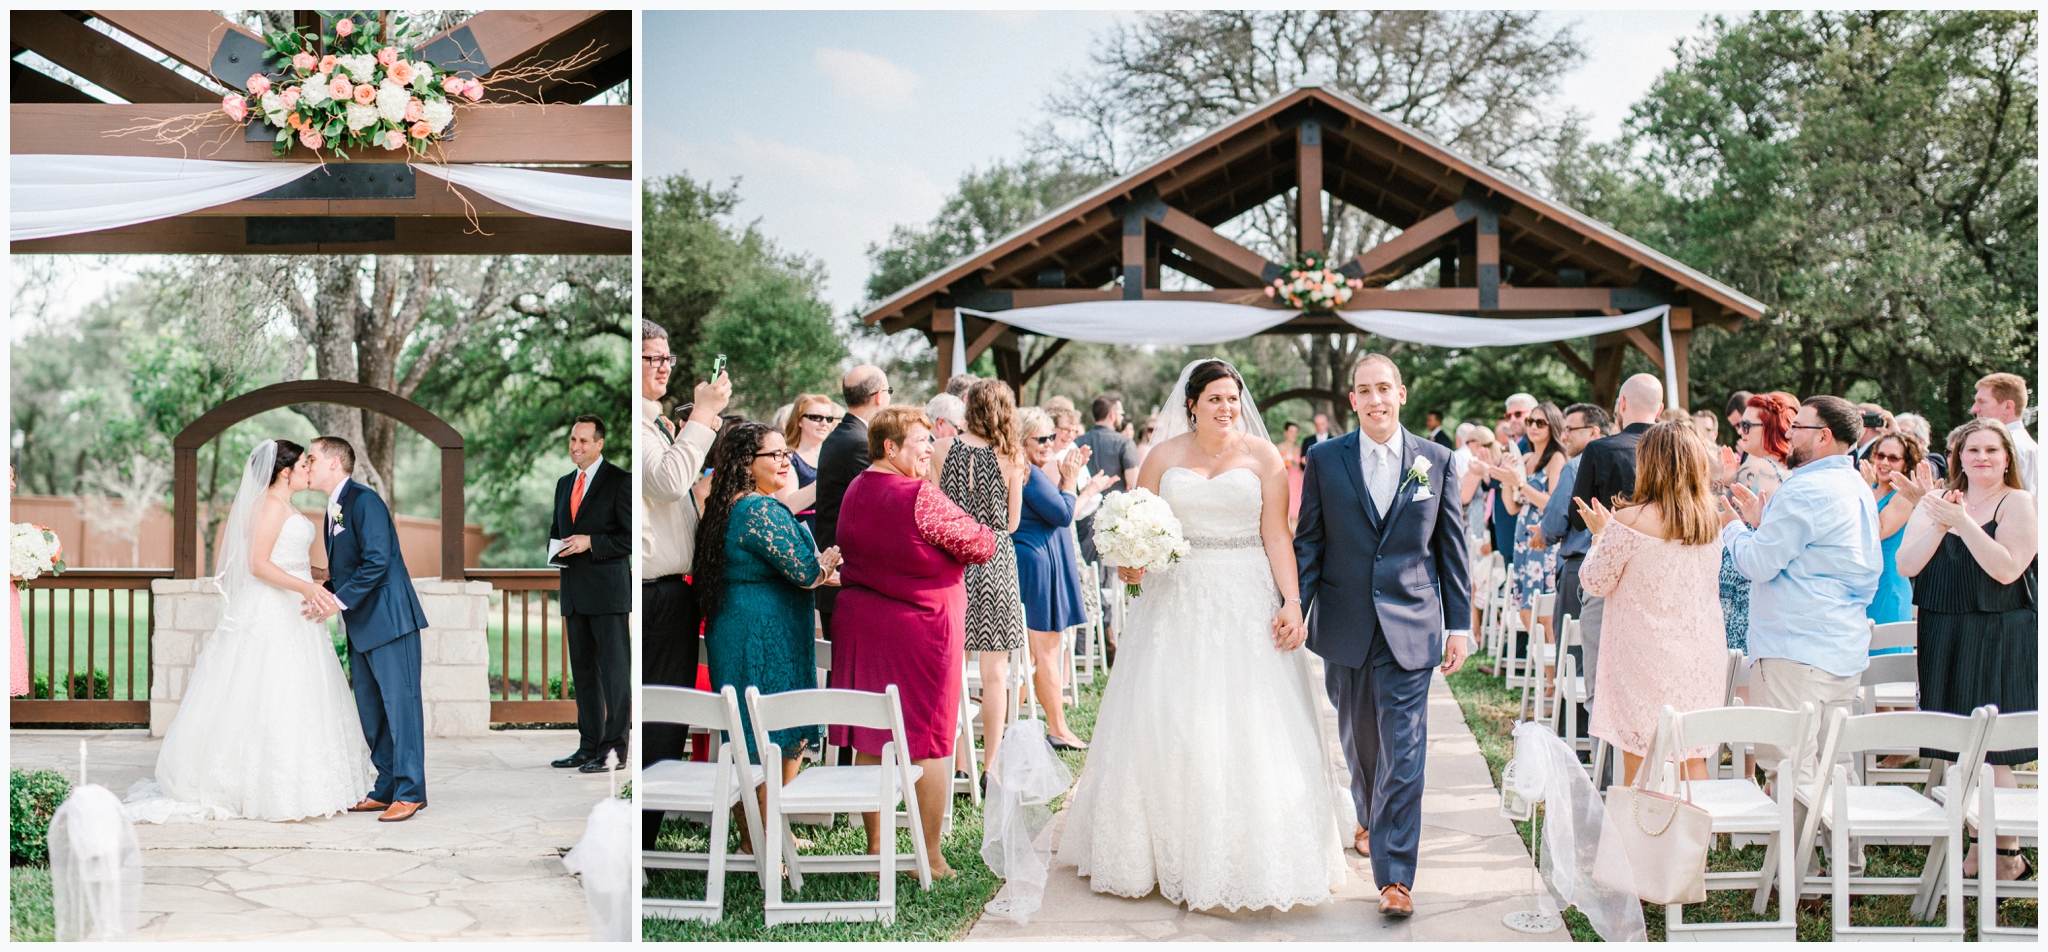 joslyn-holtfort-photography-austin-texas-wedding-the-union-on-eighth-georgetown_0024